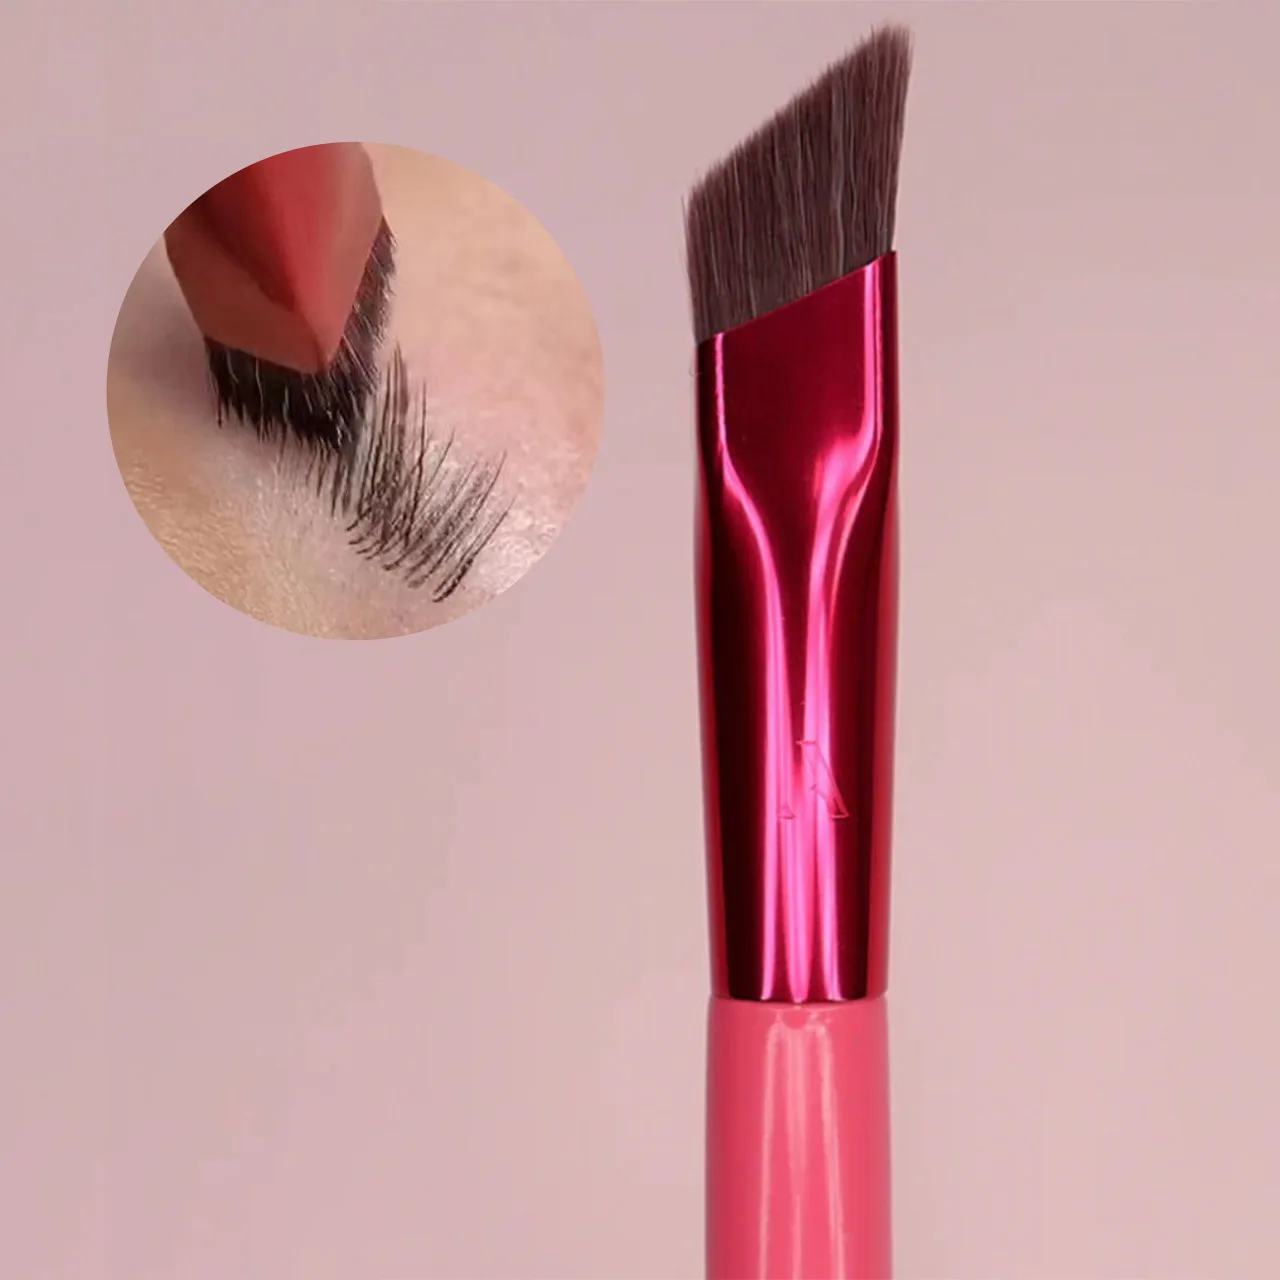 

Sdatter Wild Eyebrow Brush Eyelash Comb makeup brushes Dual Ended Angled brush Spoolie brush 2 in 1 Lash eyebrow brush set makeu